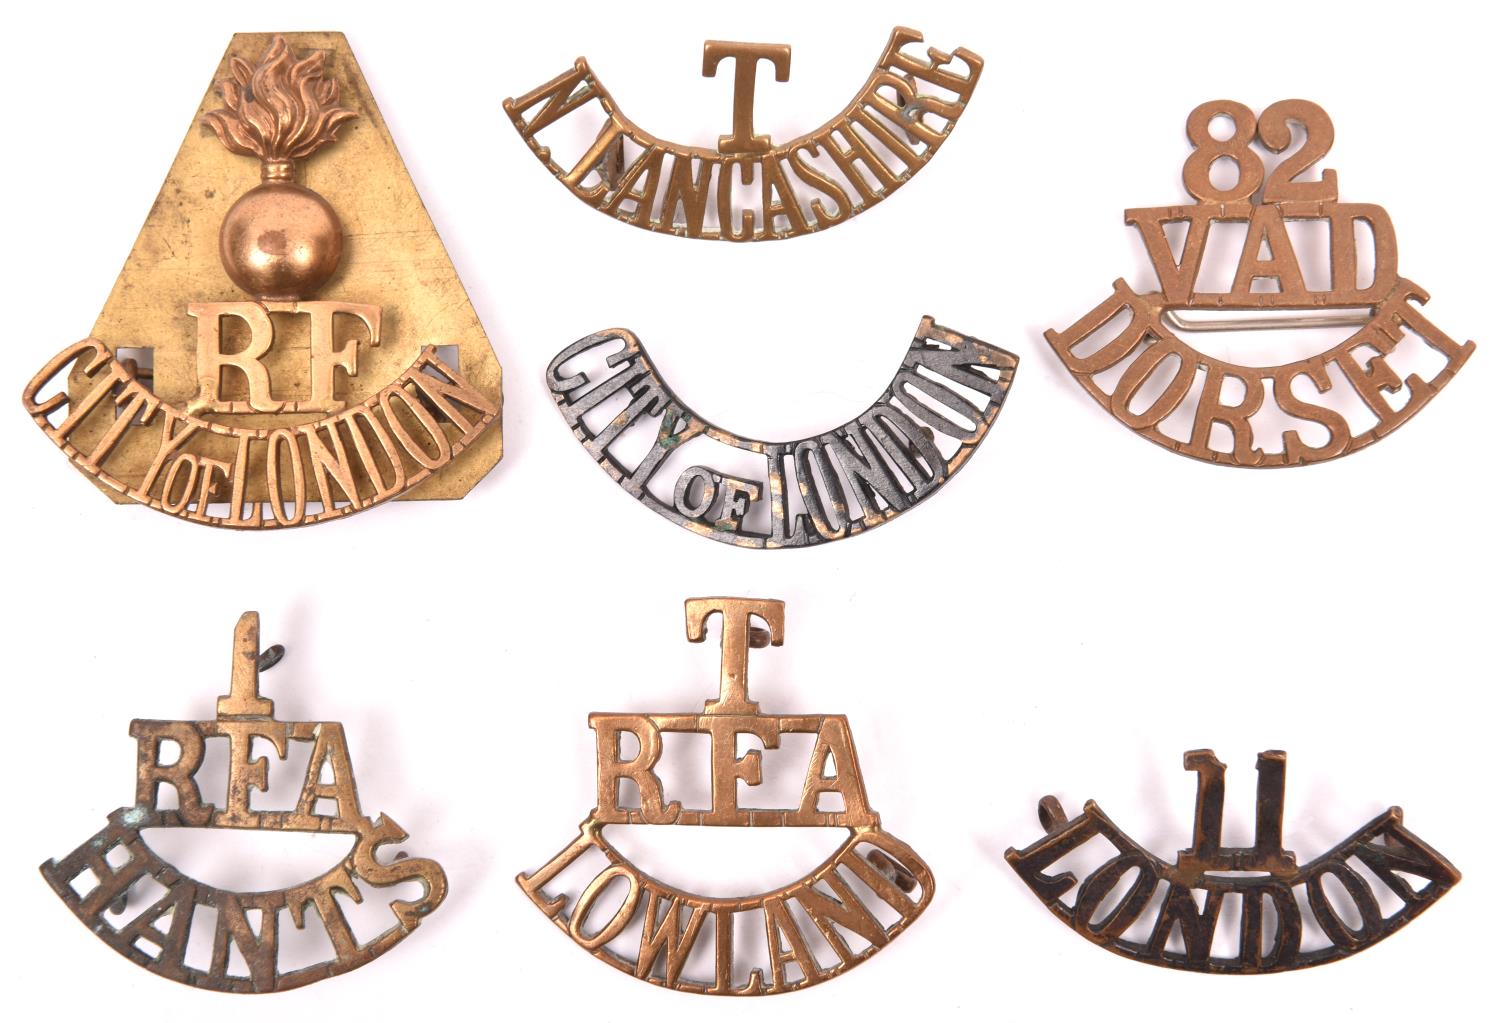 6 Territorial brass shoulder titles: T/RFA/LOWLAND (1 lug missing), 1/RFA/HANTS (worn), grenade/RF/